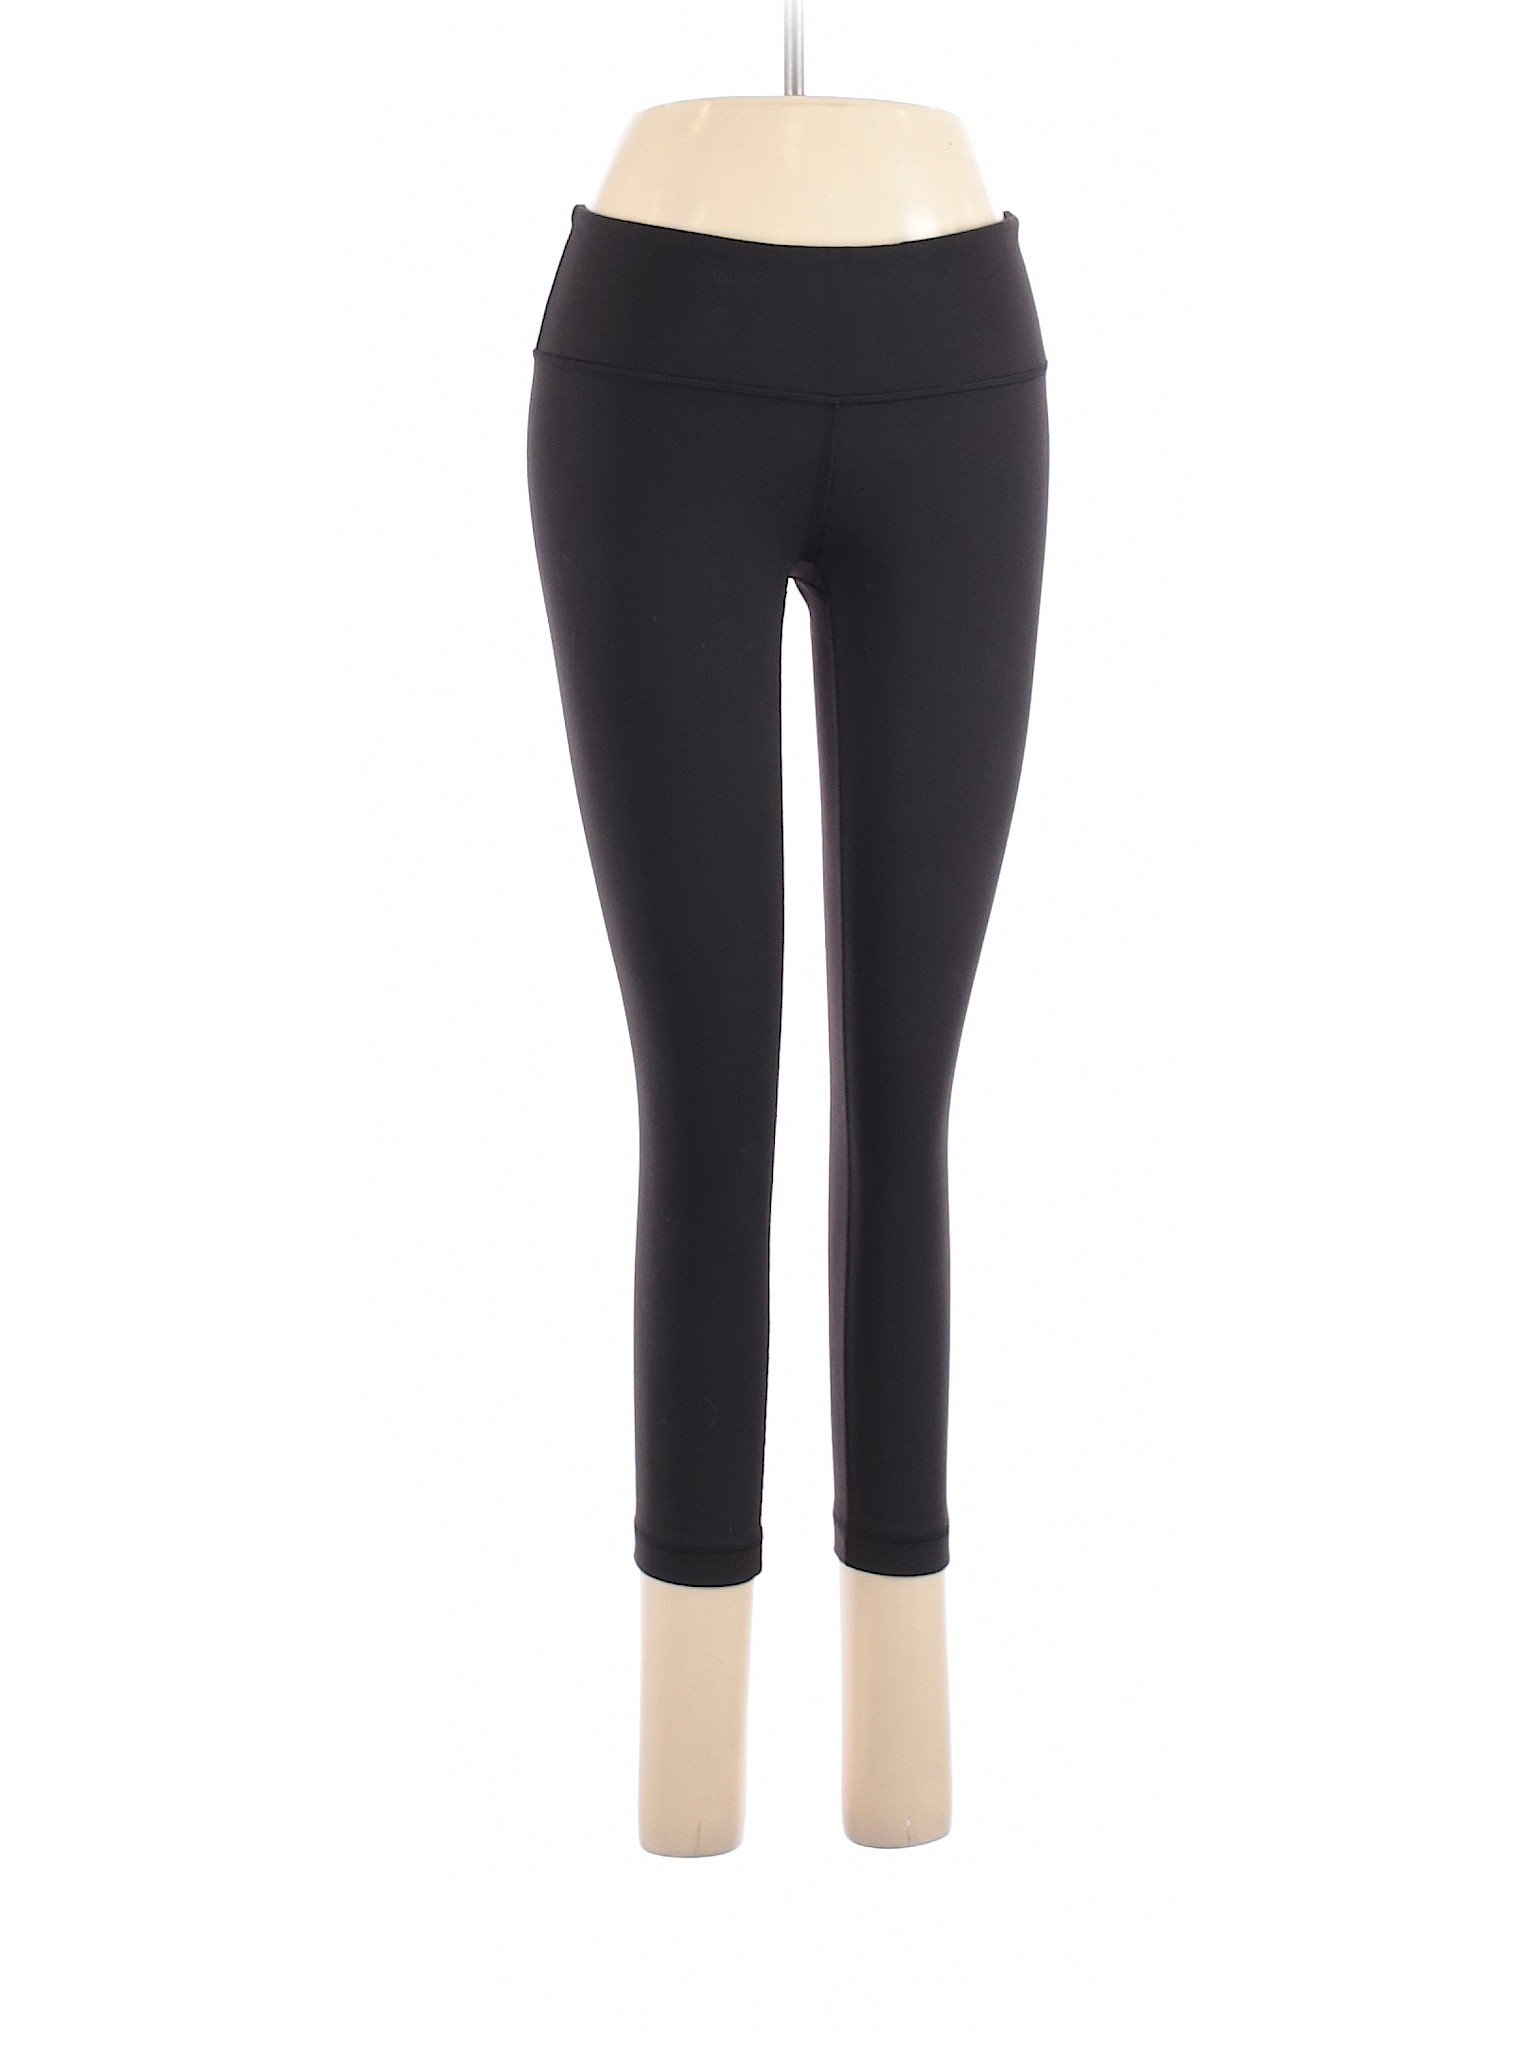 Lululemon Athletica Solid Black Active Pants Size 6 - 48% off | thredUP